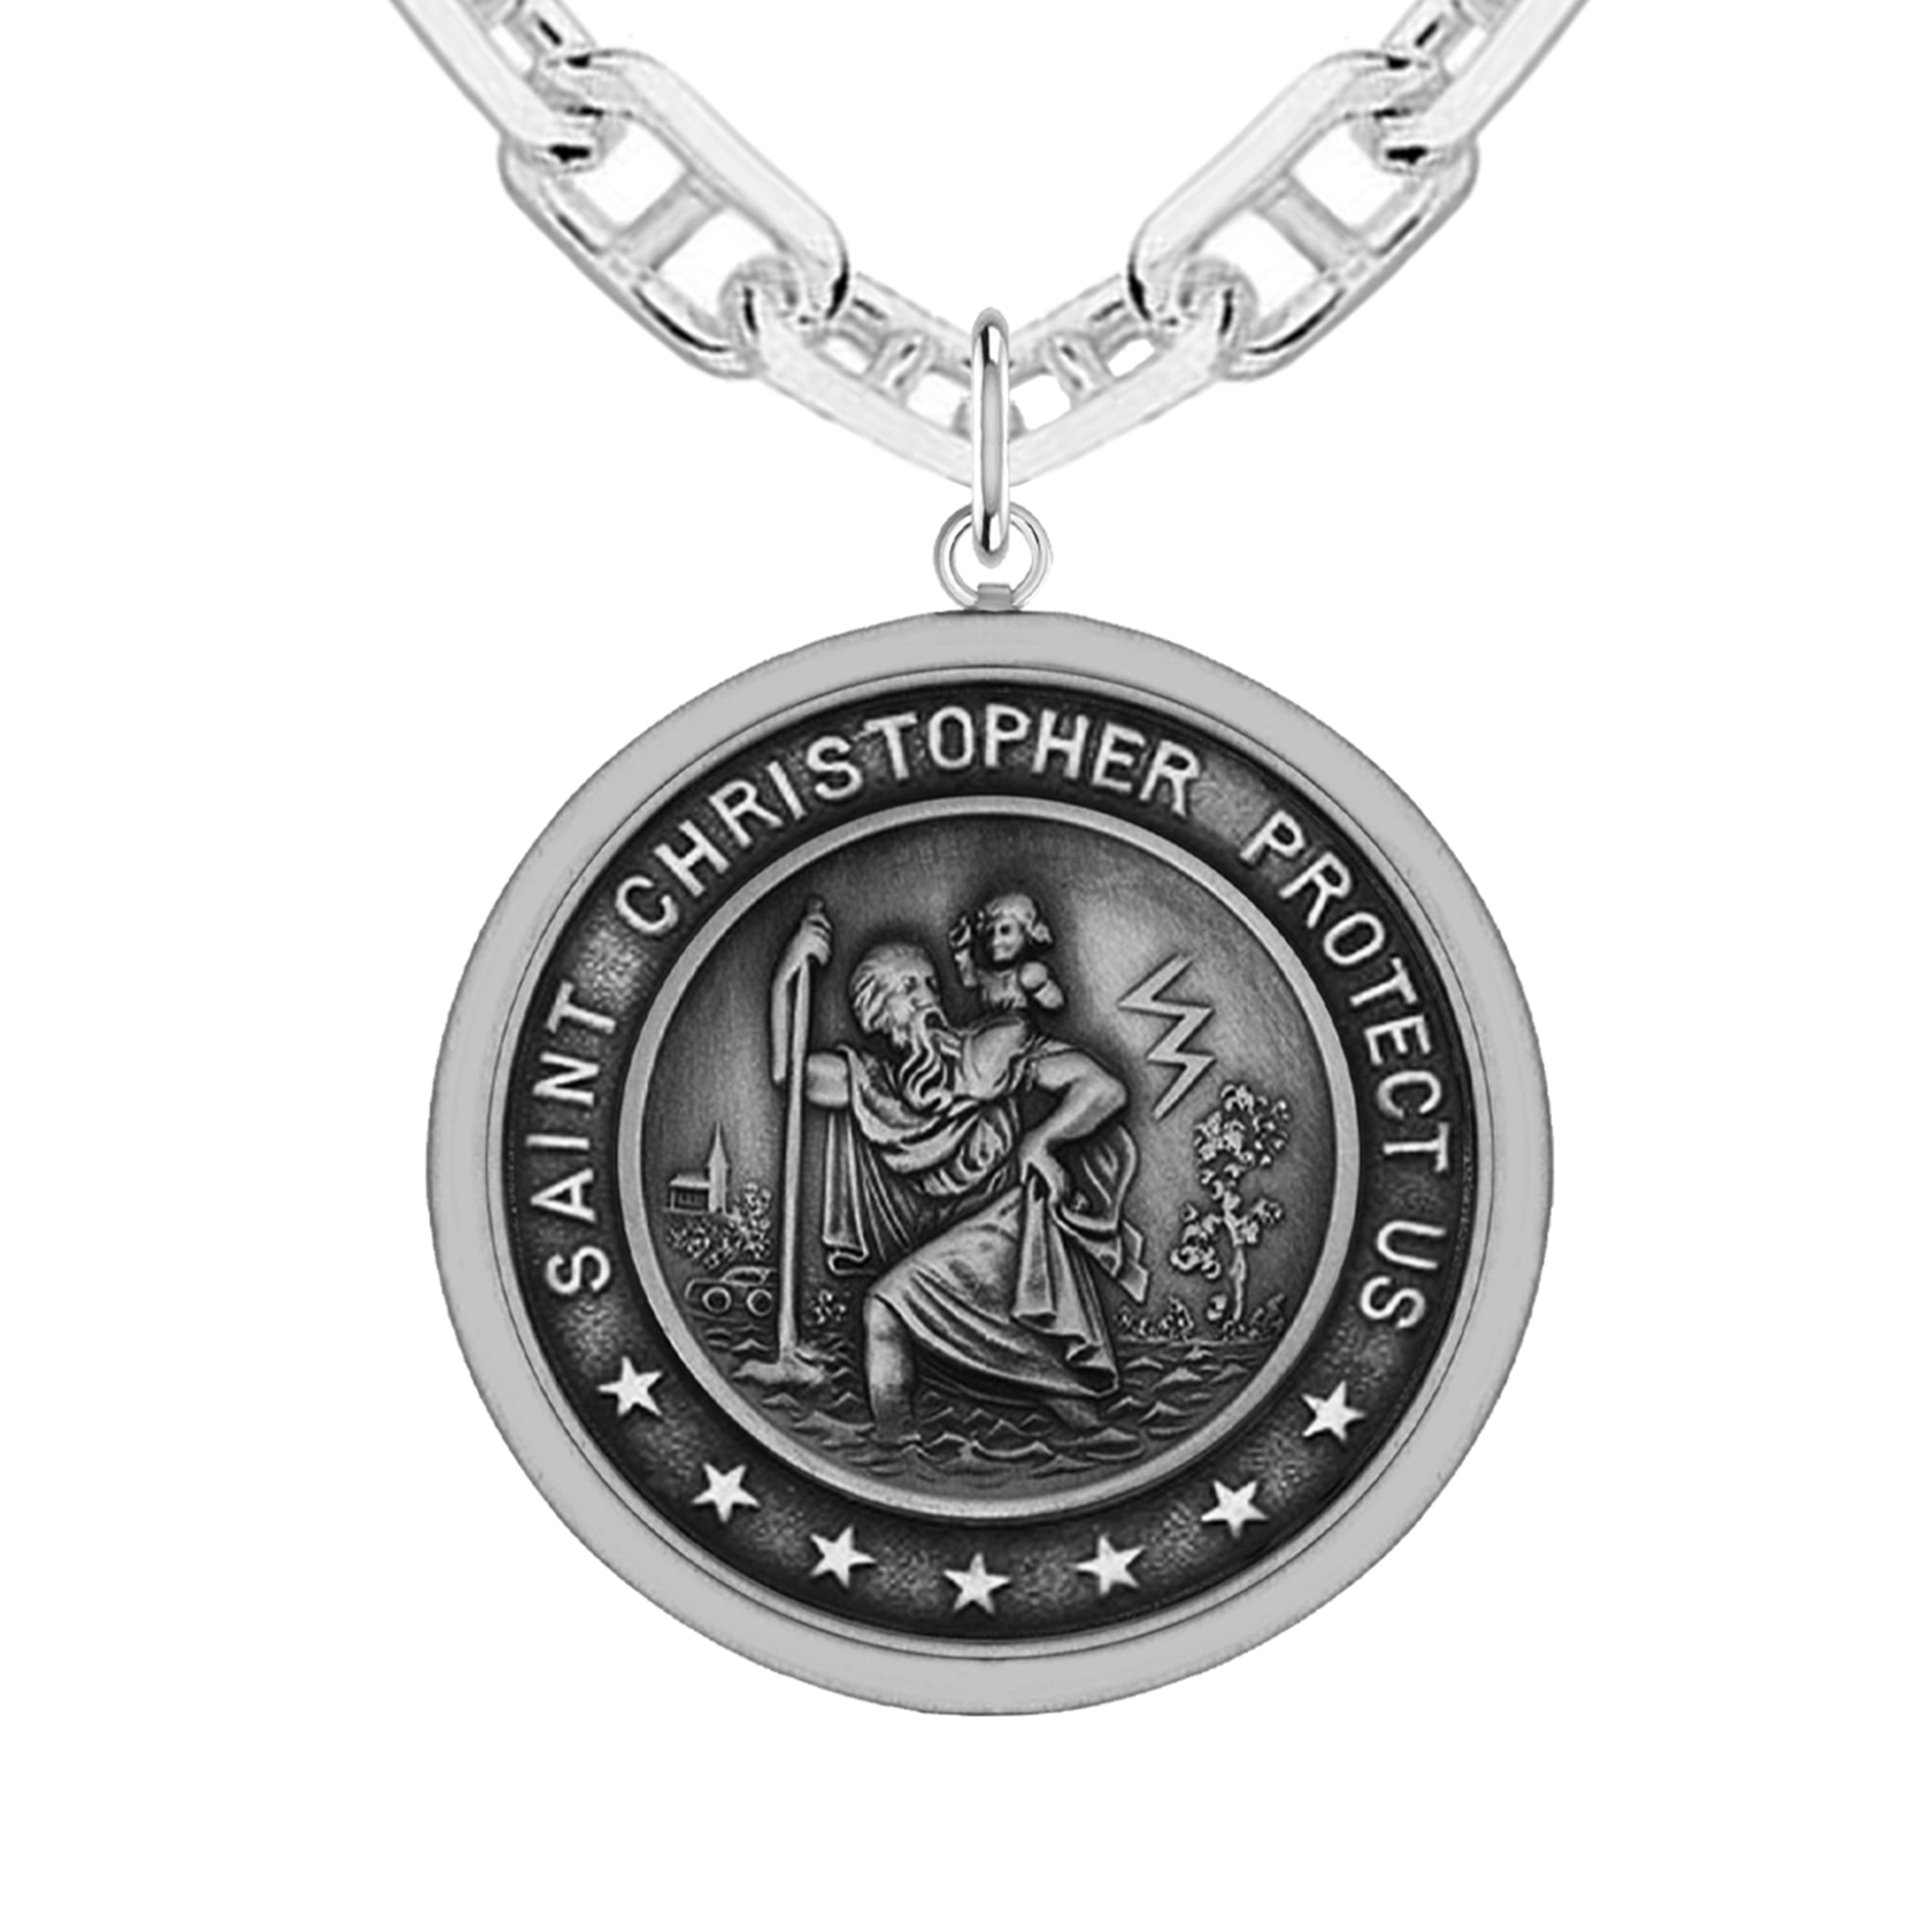 St christopher silver antique finish pendant 